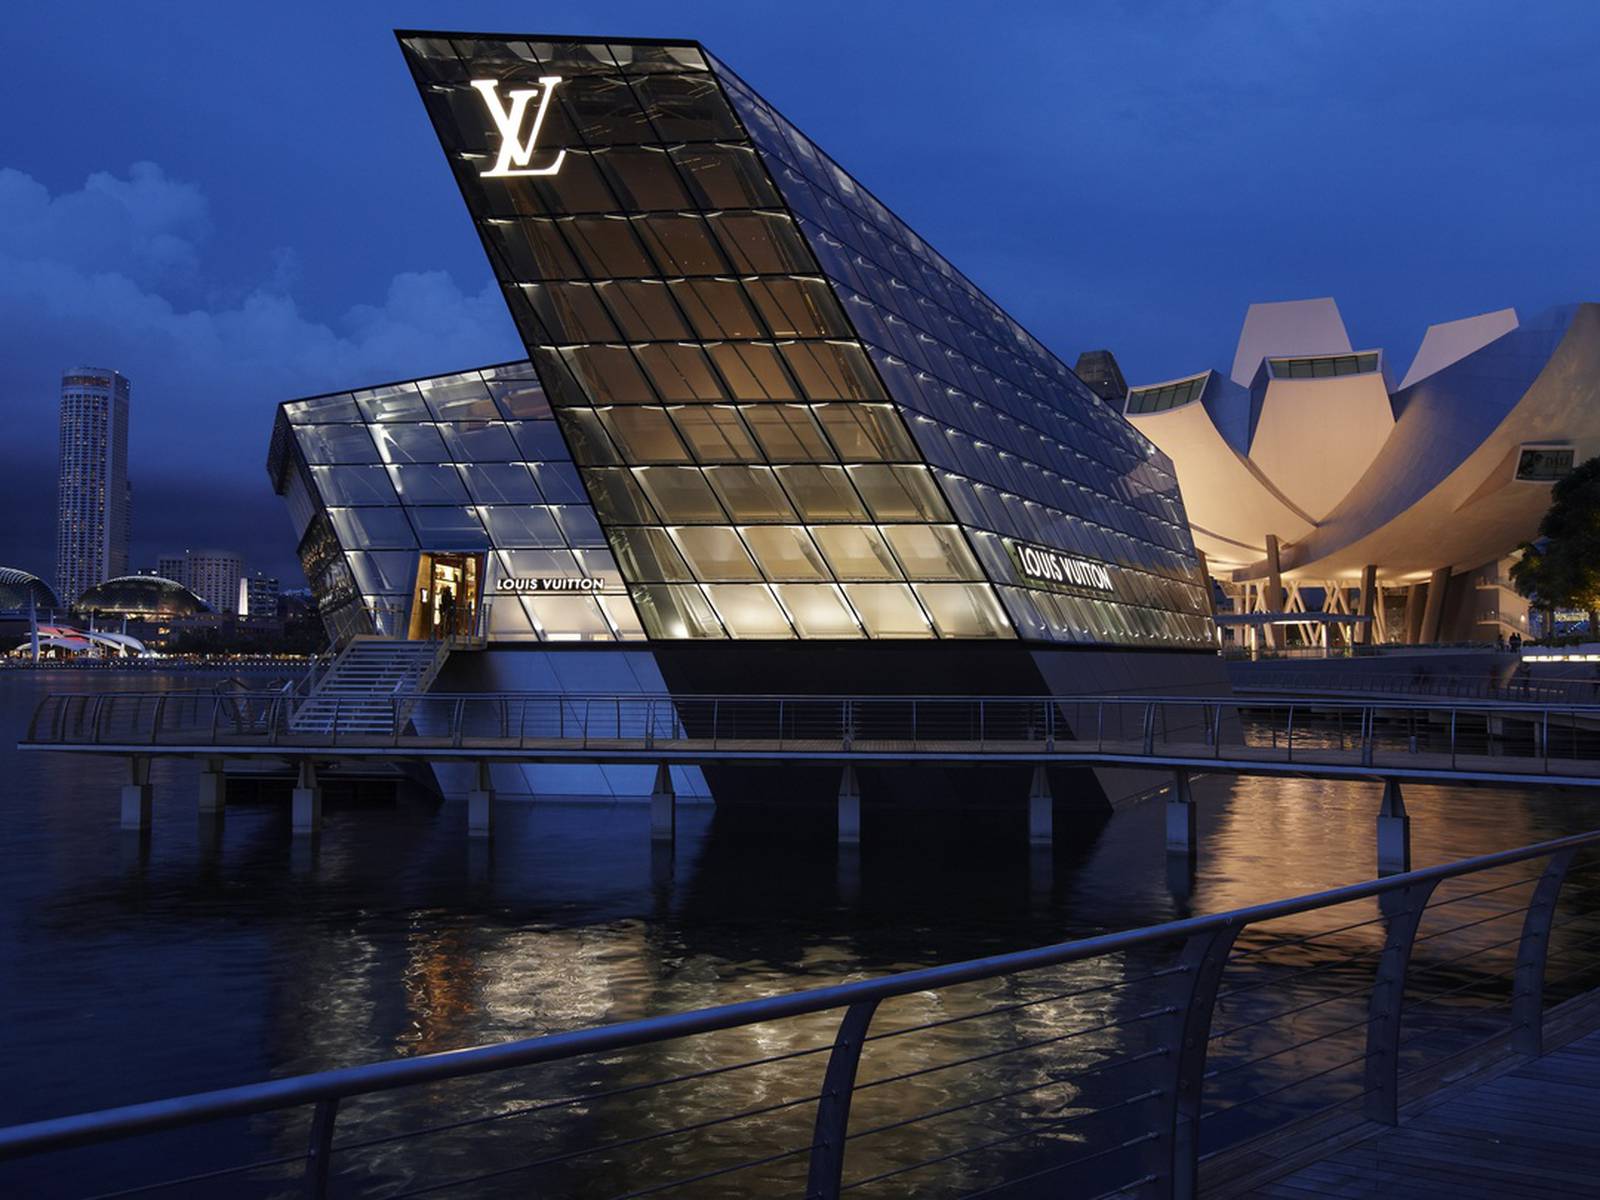 The Irishman building the global Louis Vuitton empire – The Irish Times